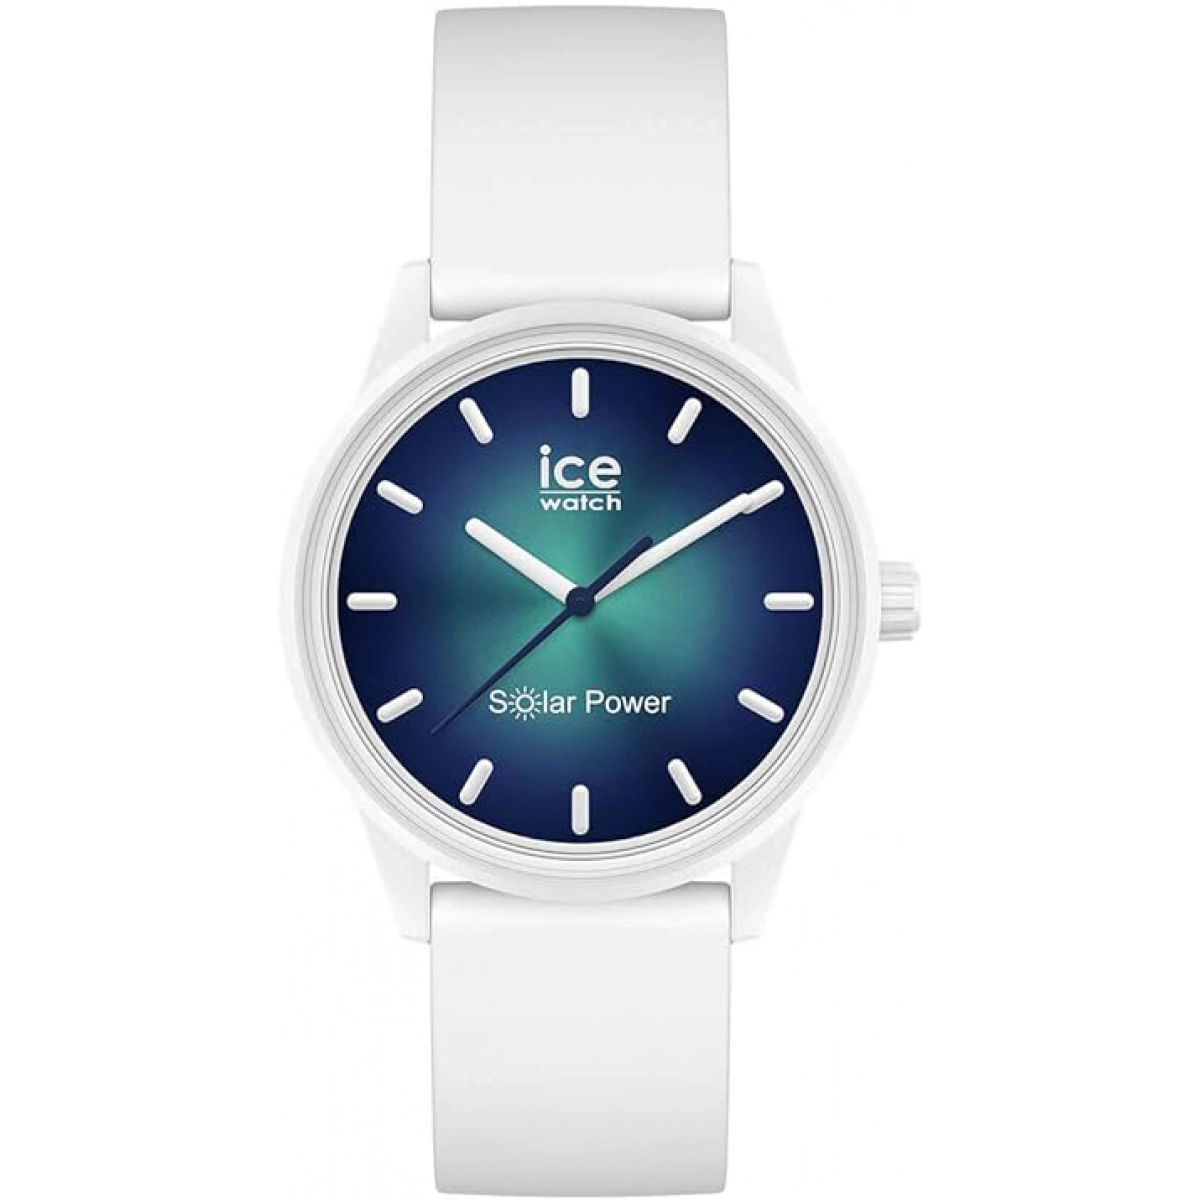 RELOJ ANALOGICO DE UNISEX ICE 019029 Ice watch